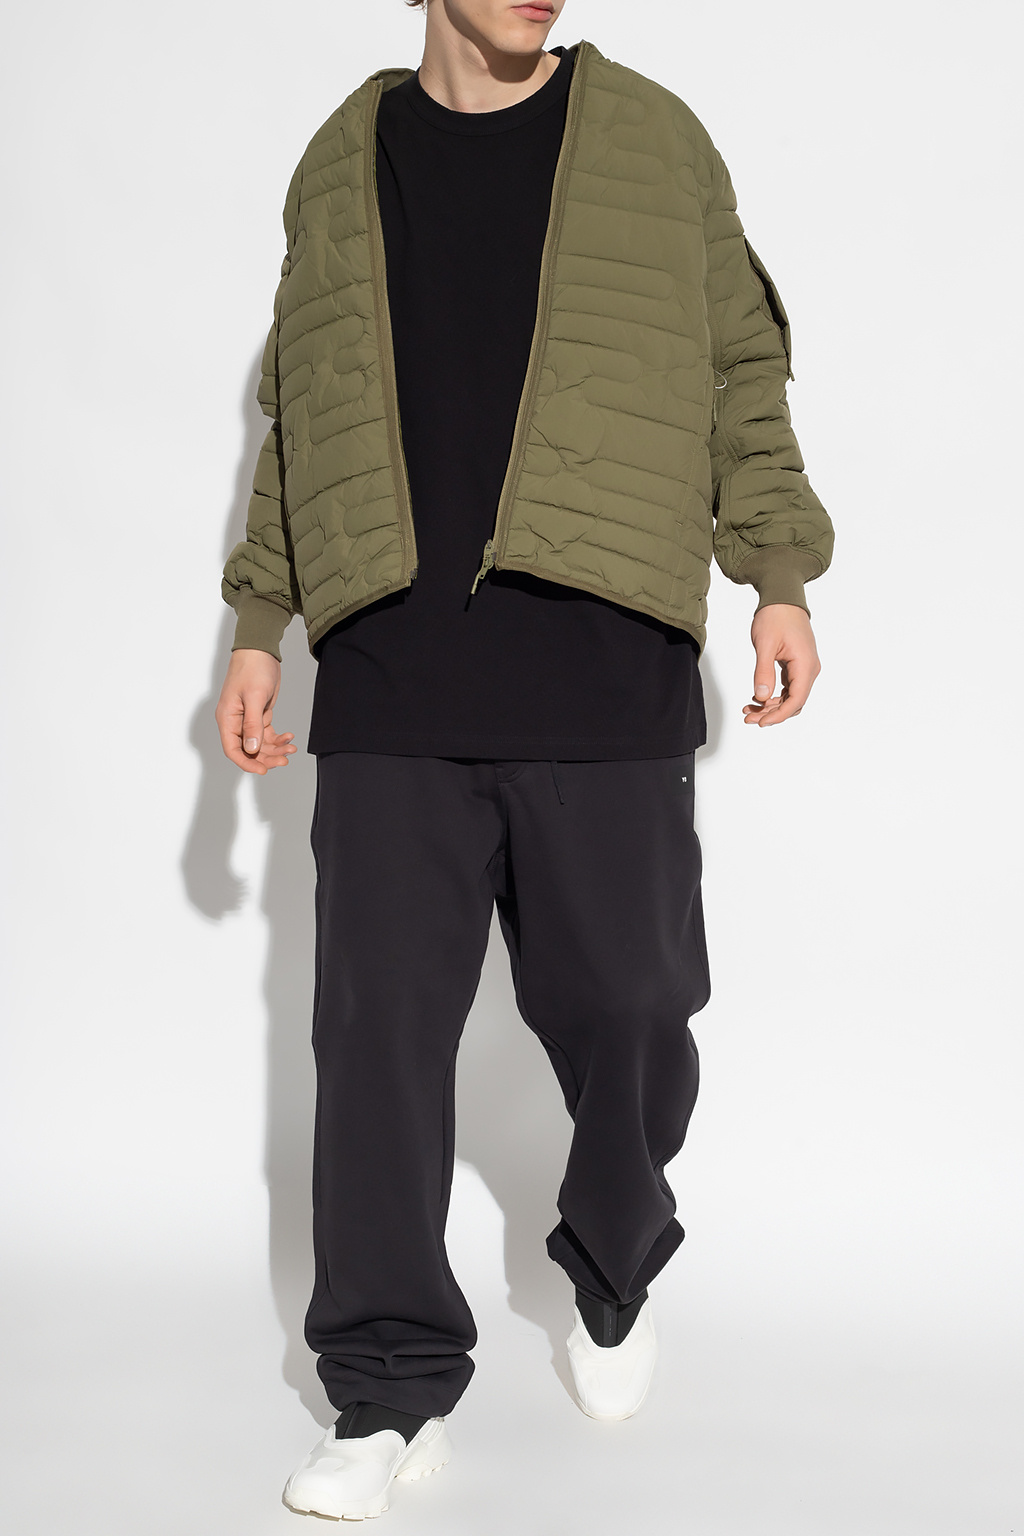 Y-3 Yohji Yamamoto lautre chose velvet long sleeve shift dress item